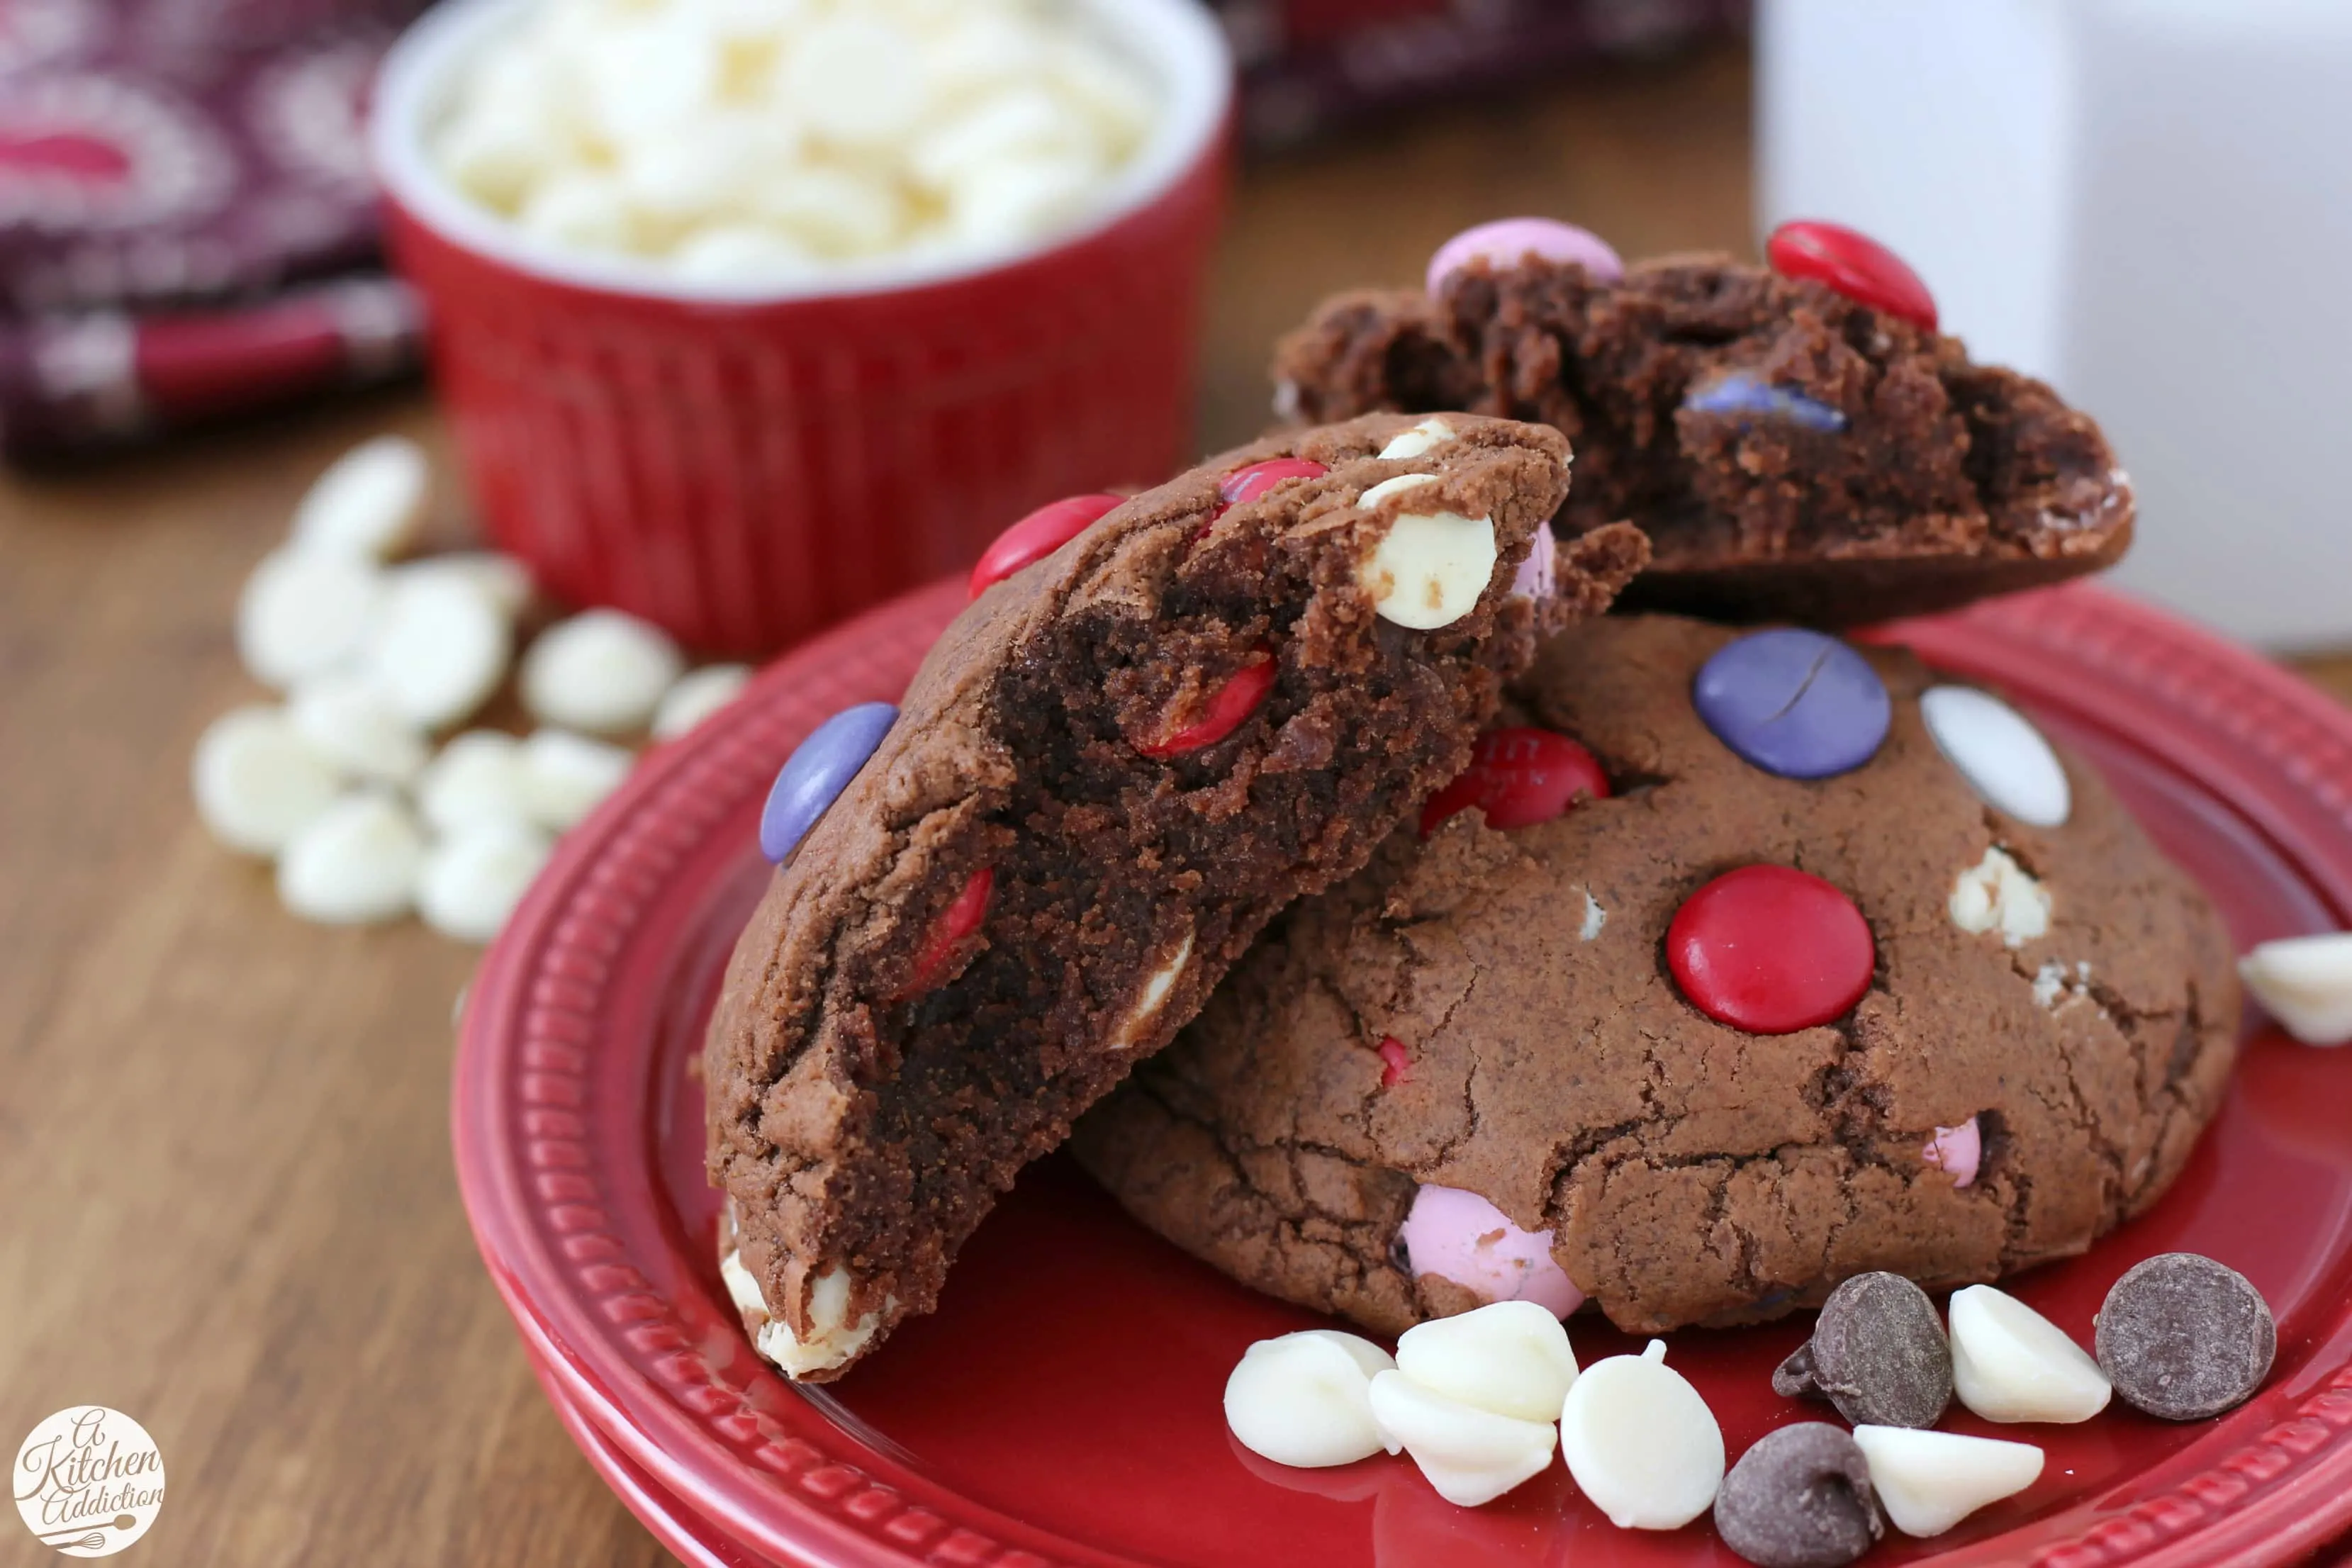 https://www.a-kitchen-addiction.com/wp-content/uploads/2016/02/triple-chocolate-fudge-cookies-w-name.jpg.webp